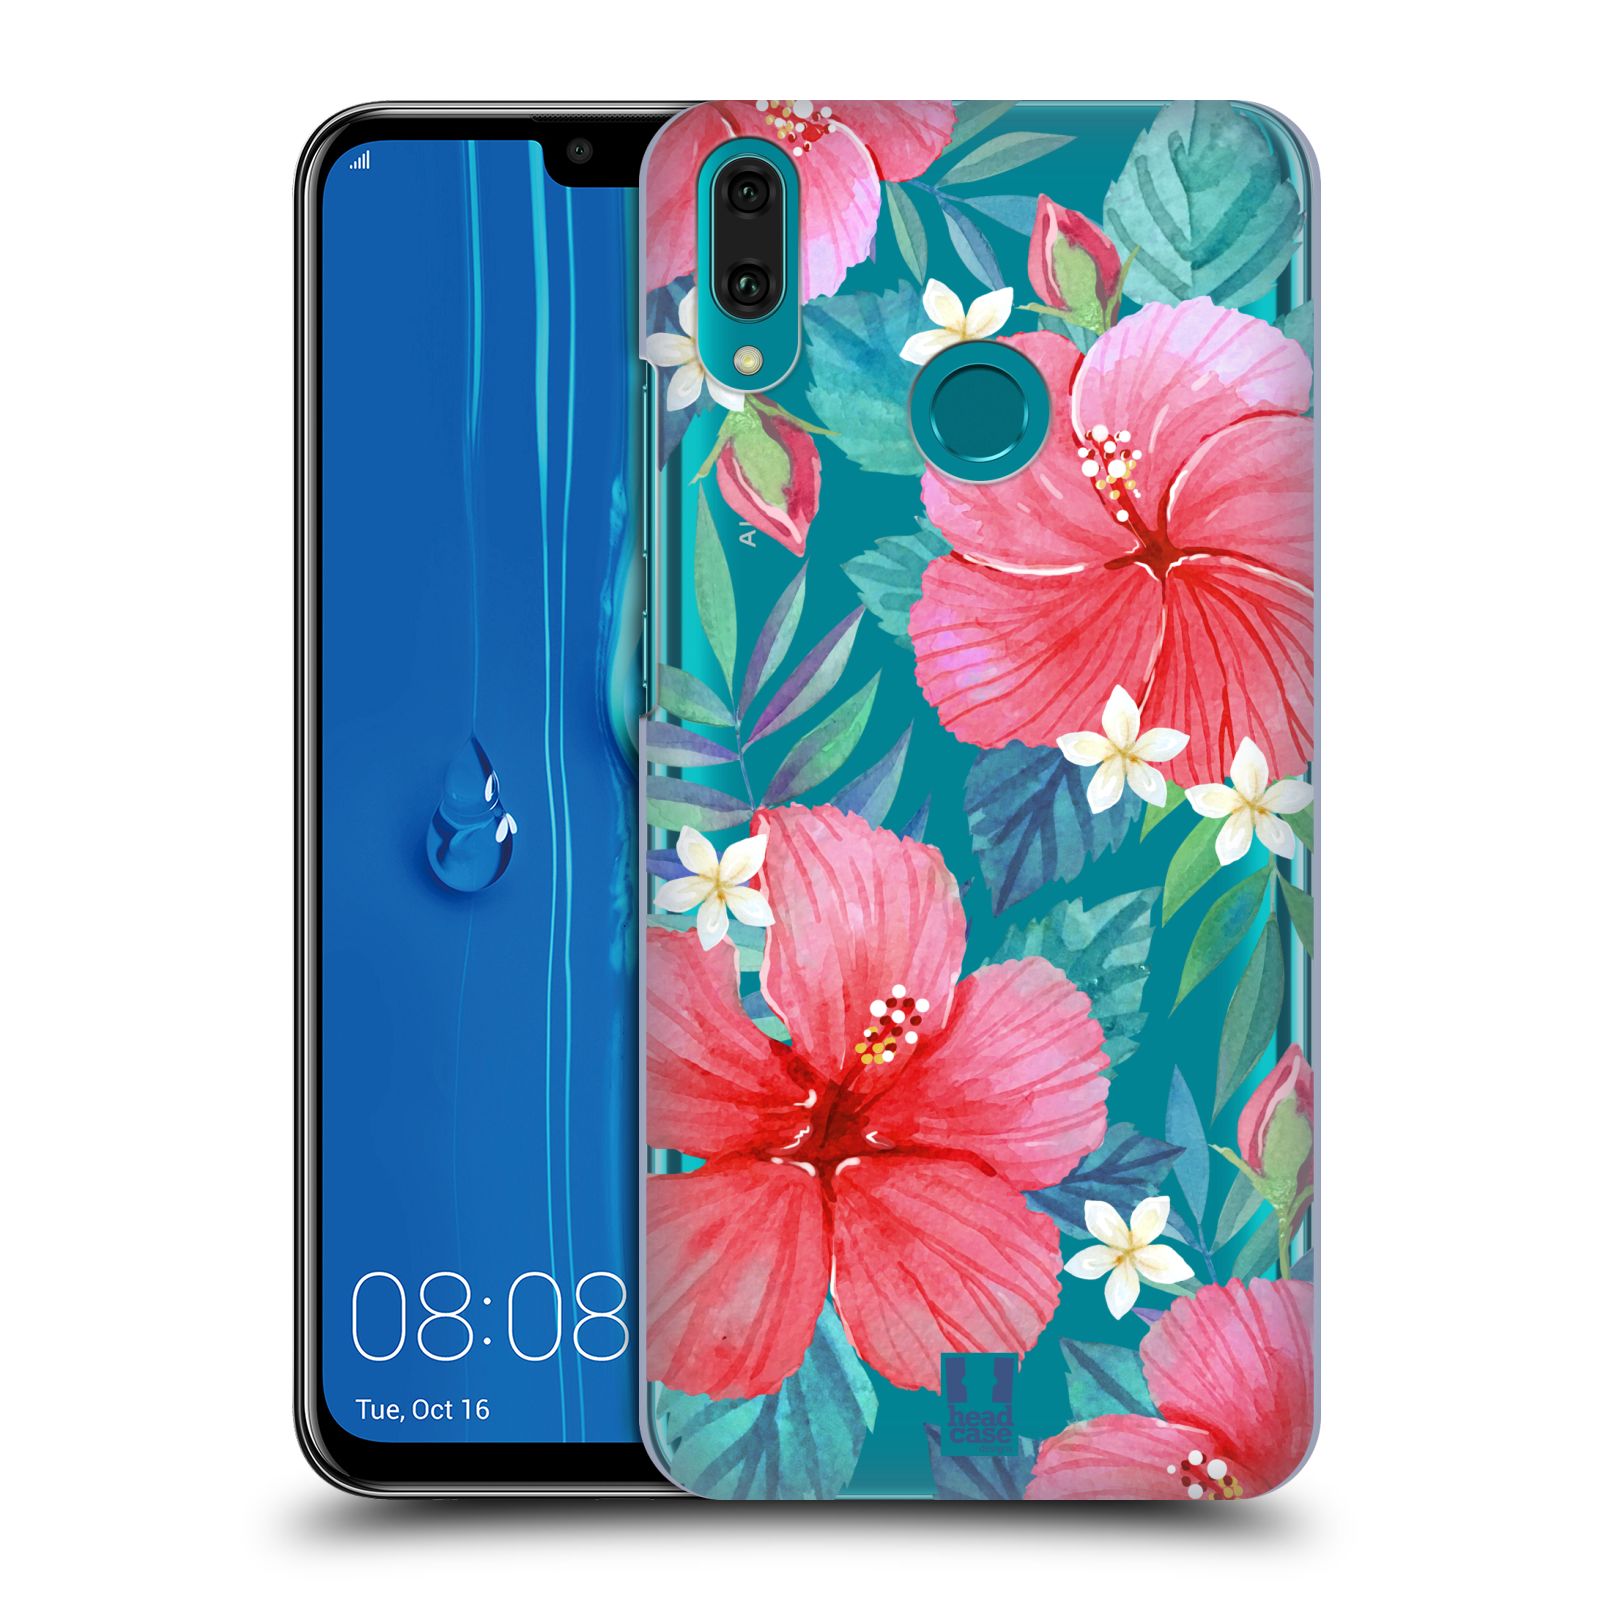 Pouzdro na mobil Huawei Y9 2019 - HEAD CASE - květinové vzory Ibišek čínská růže